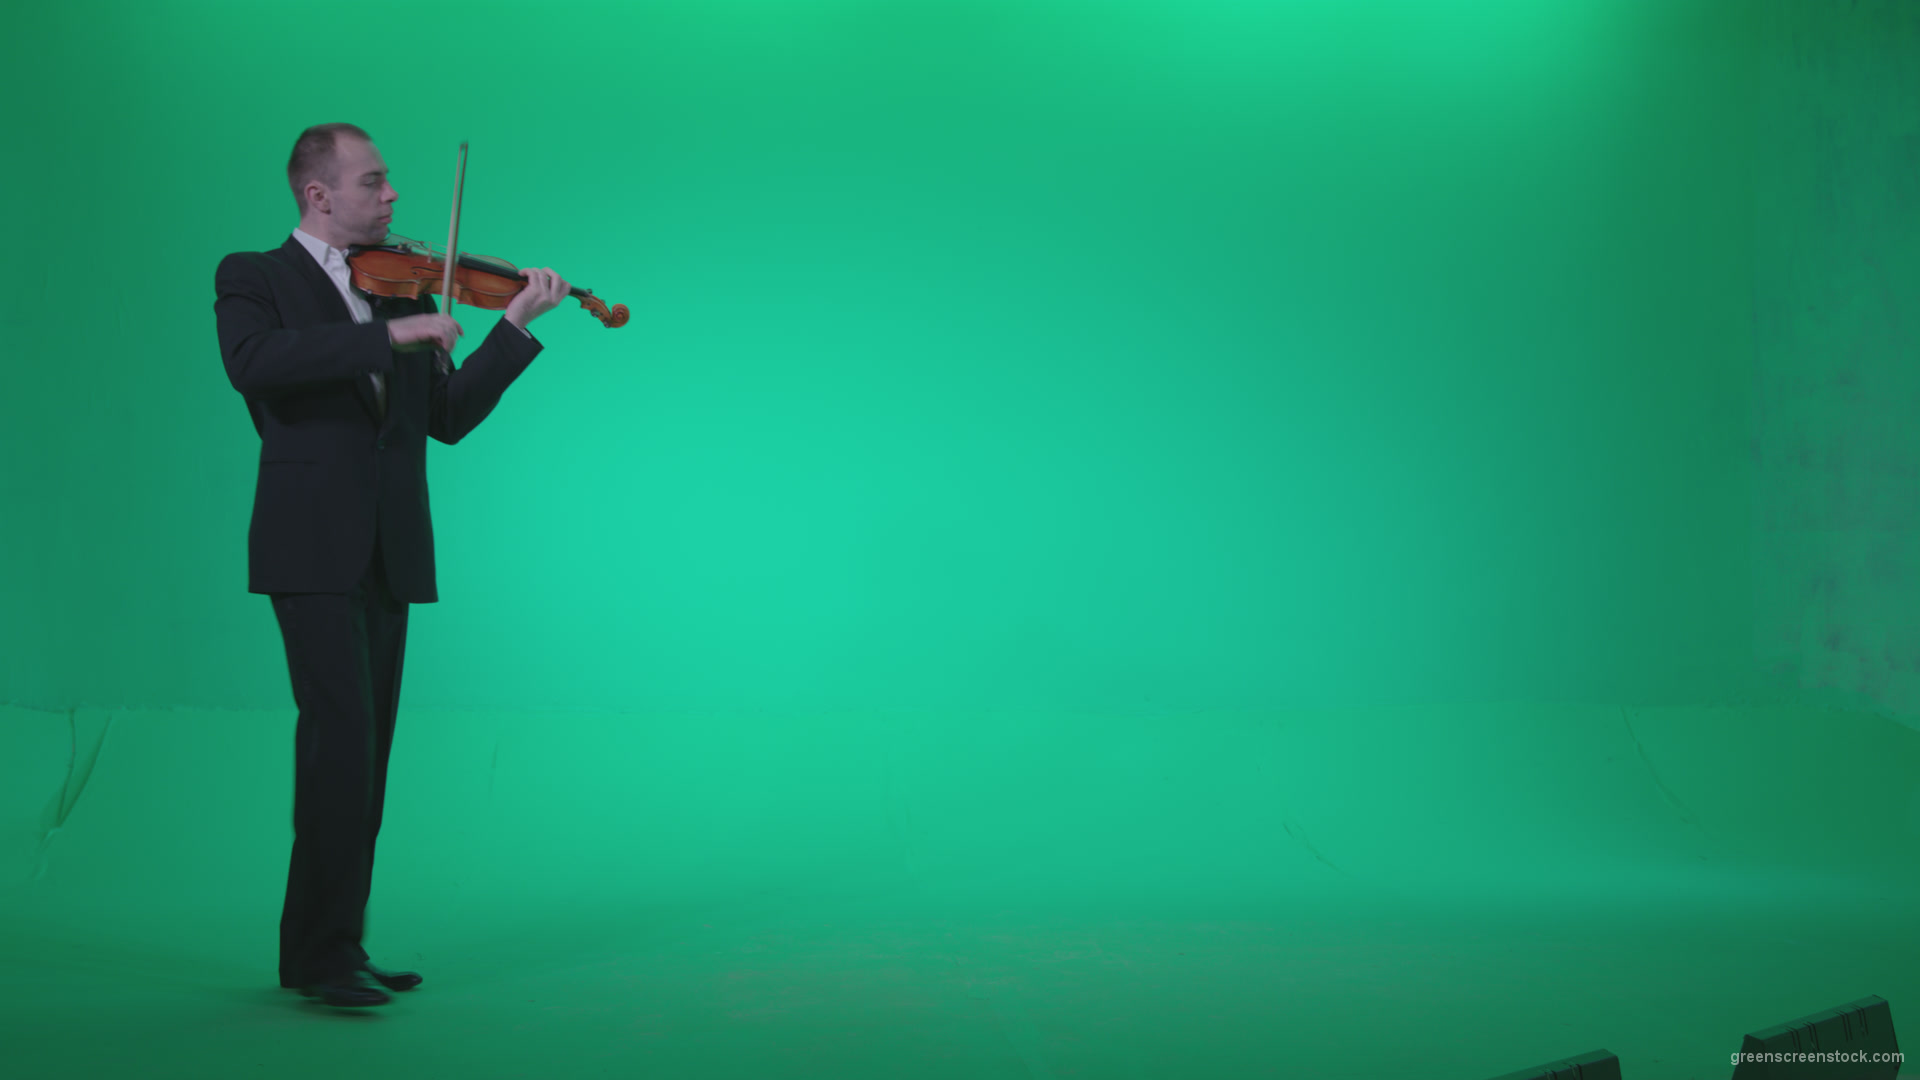 Professional-Violin-player-man-z3_006 Green Screen Stock